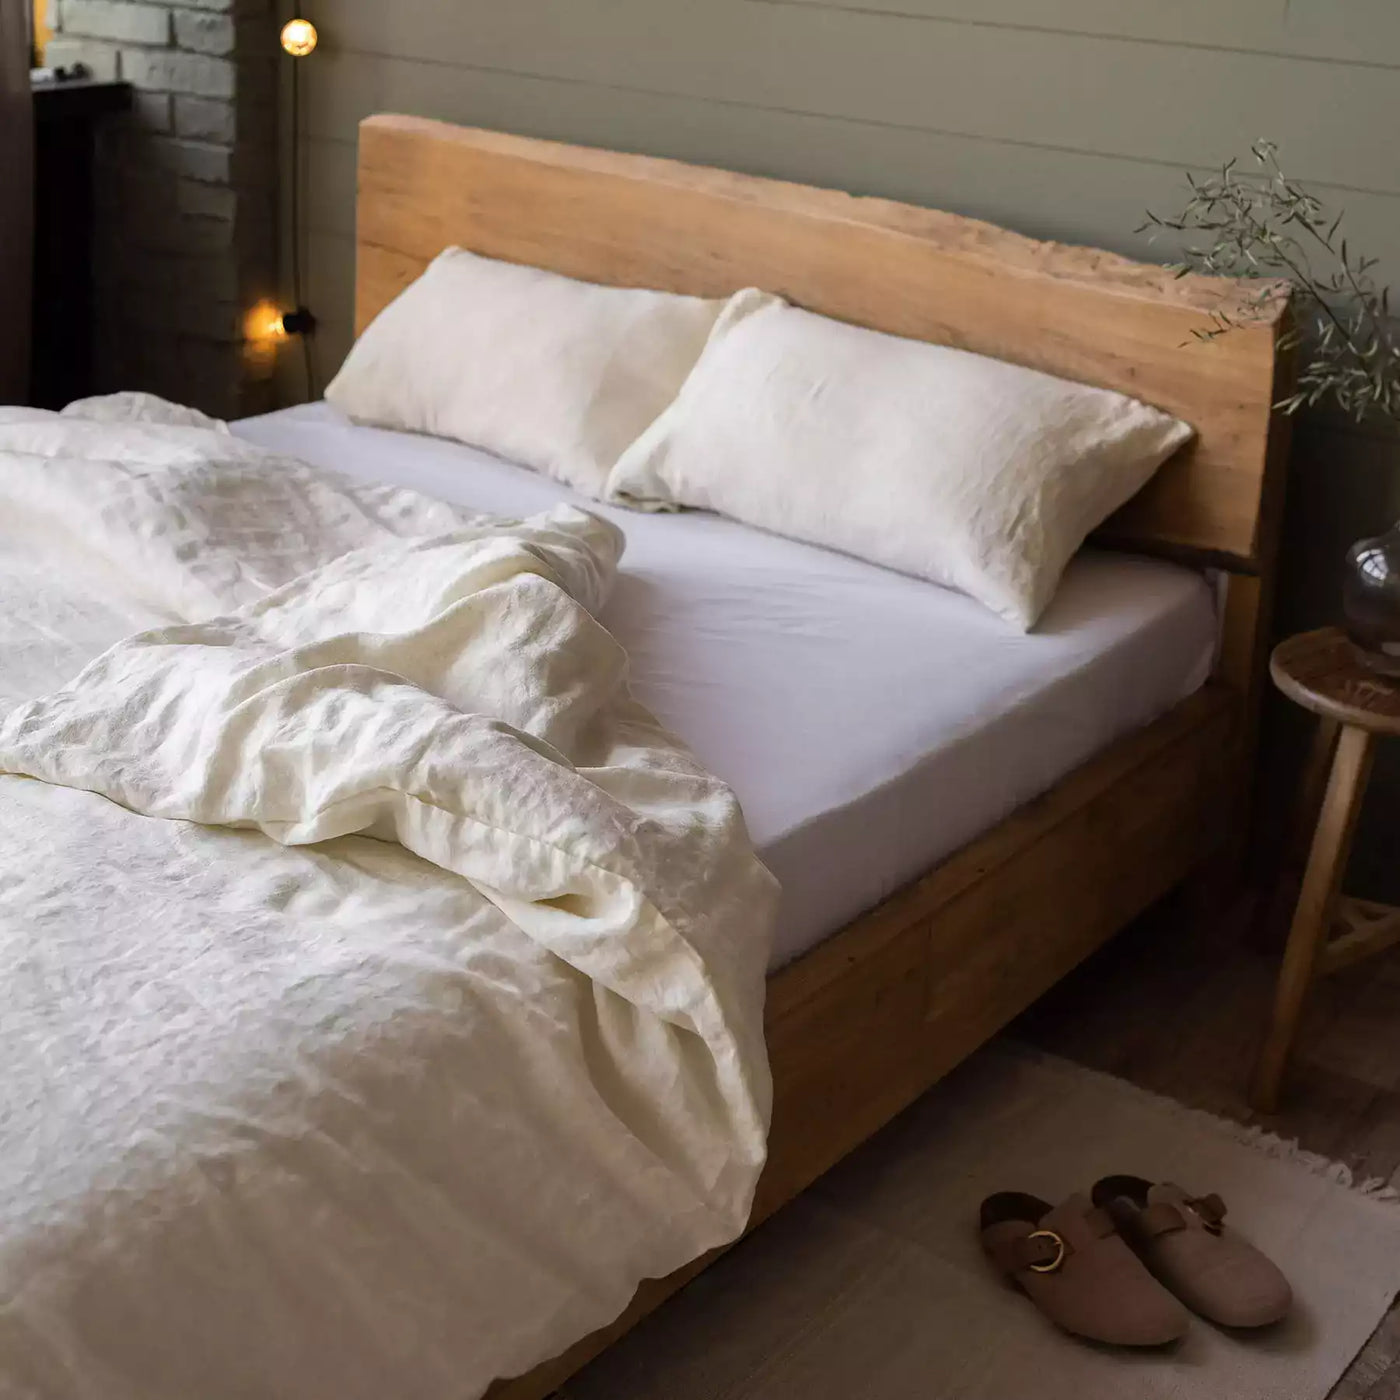 Linen bedding set 200x200 in Vanilla cream